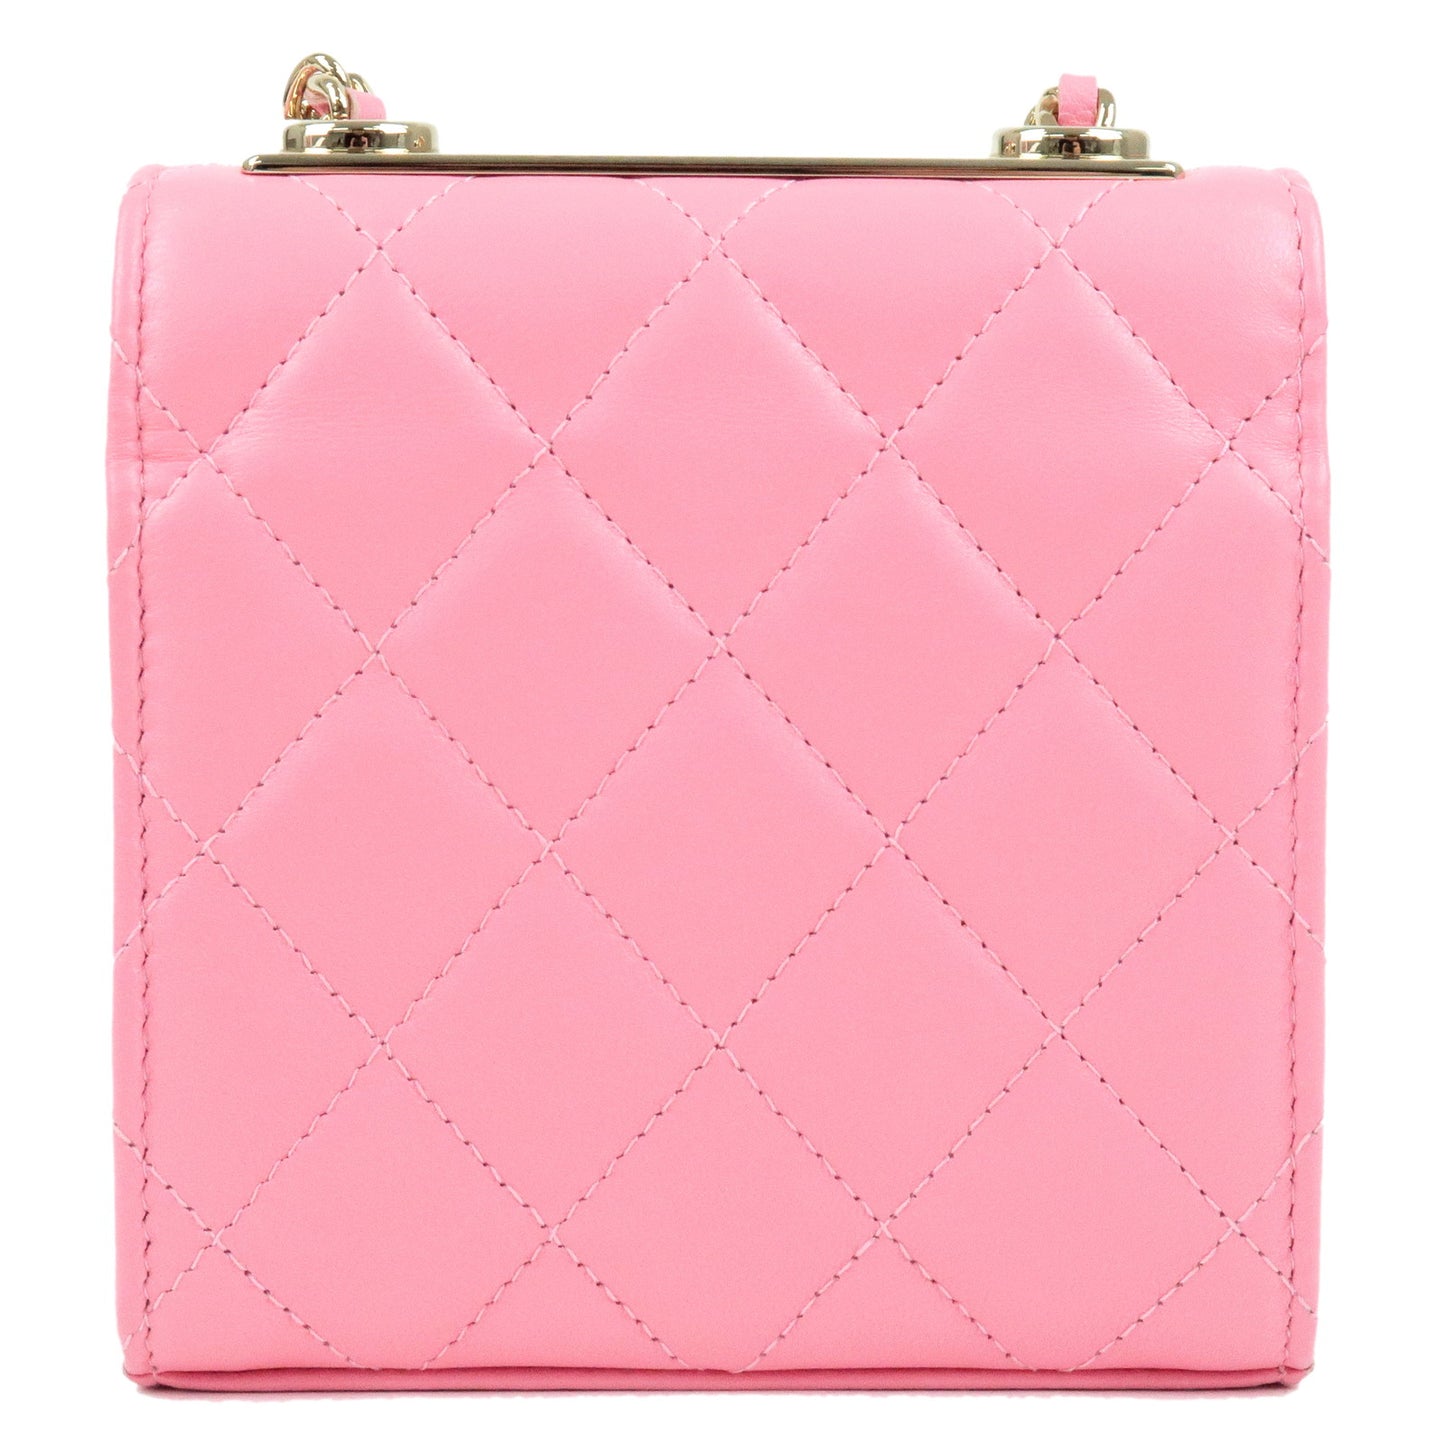 CHANEL-Trendy-CC-Mini-Matelasse-Lambskin-Shoulder-Bag-Pink-A81633